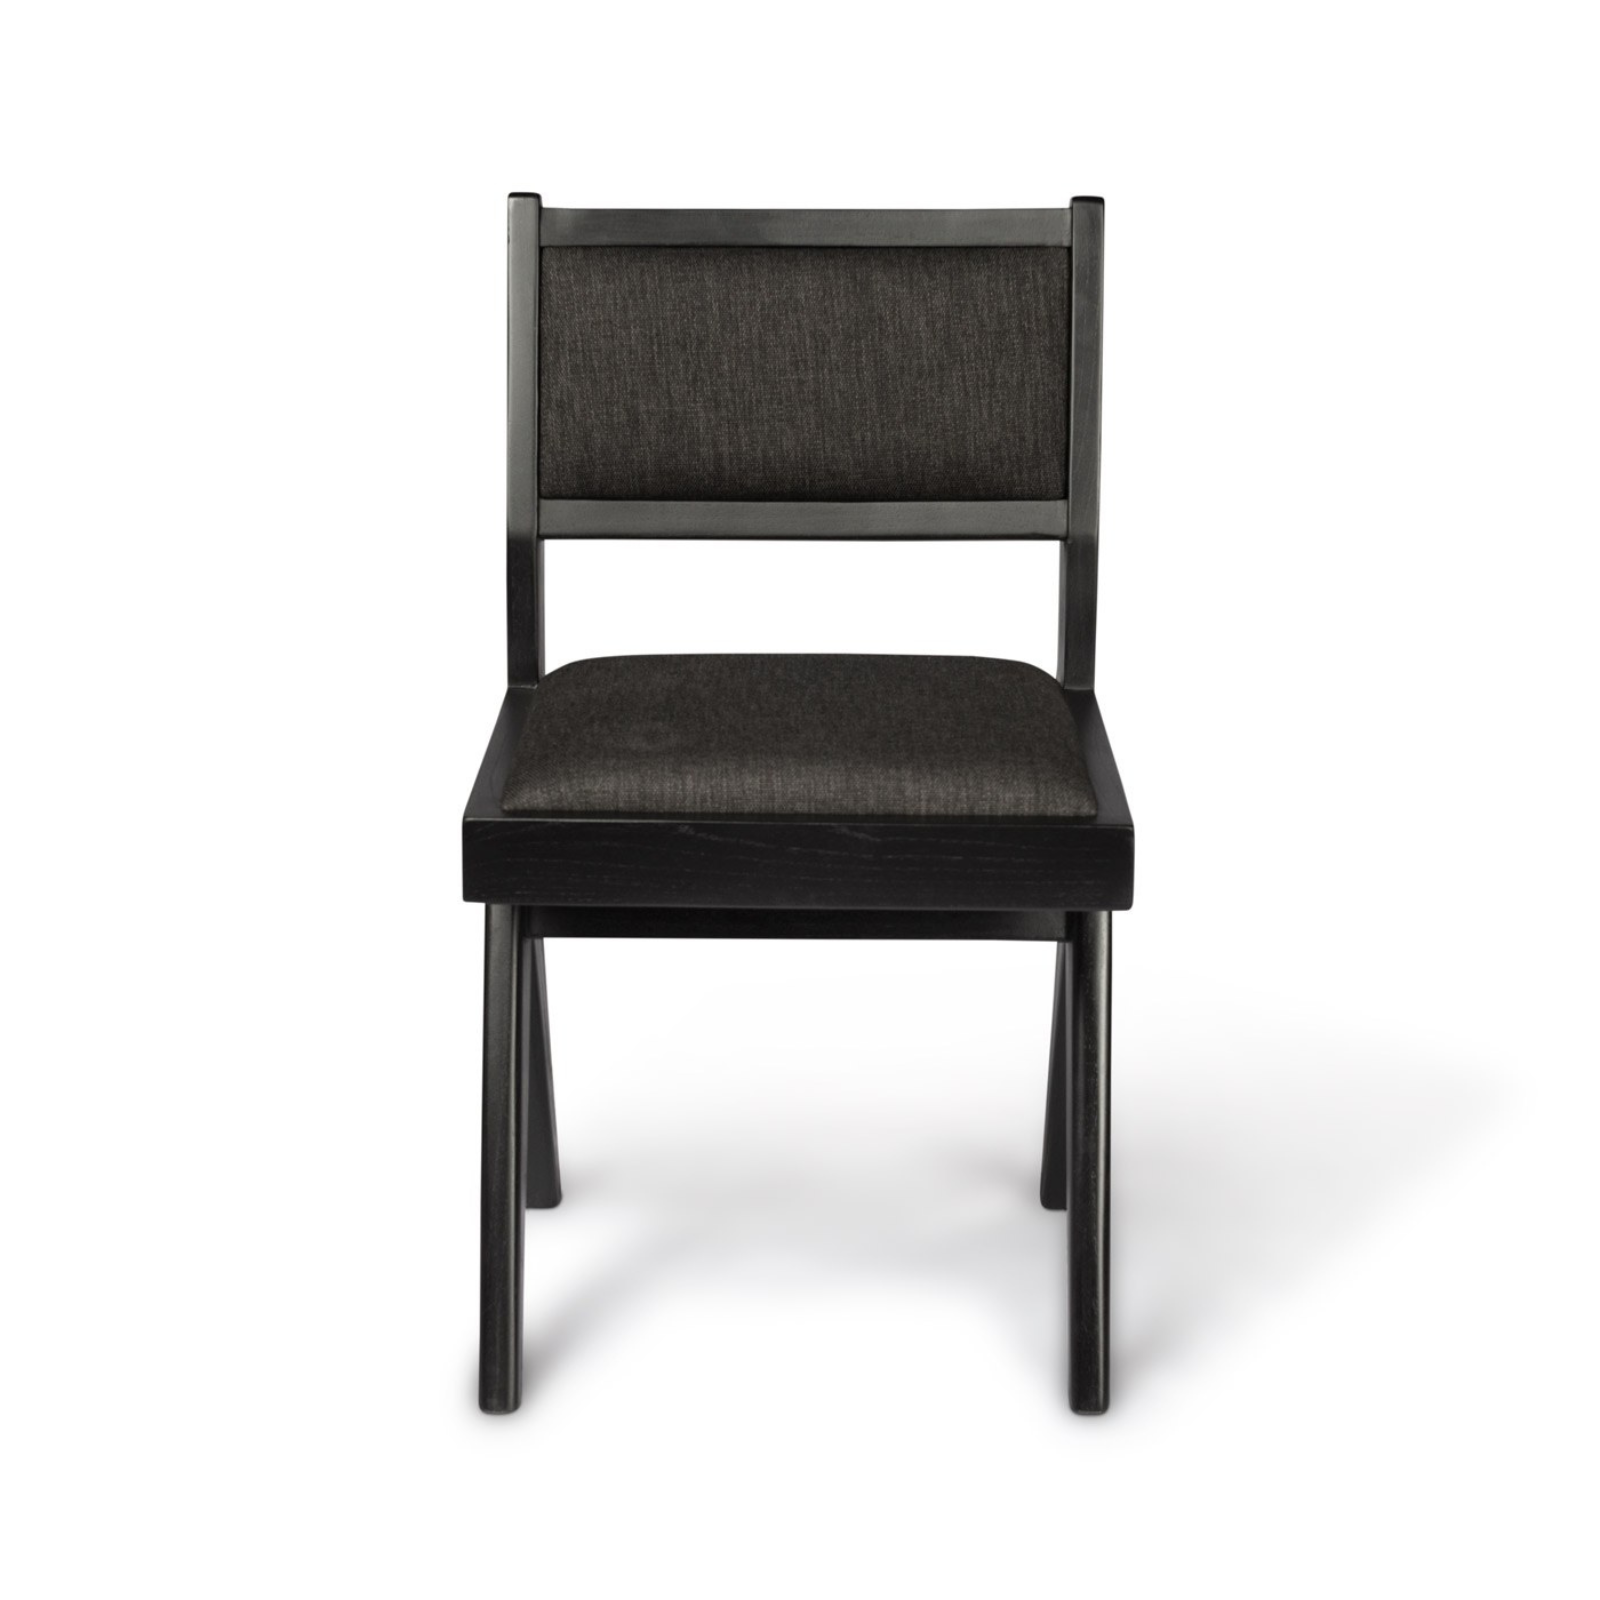 DETJER Dining Chair Upholstered in Charcoal Black